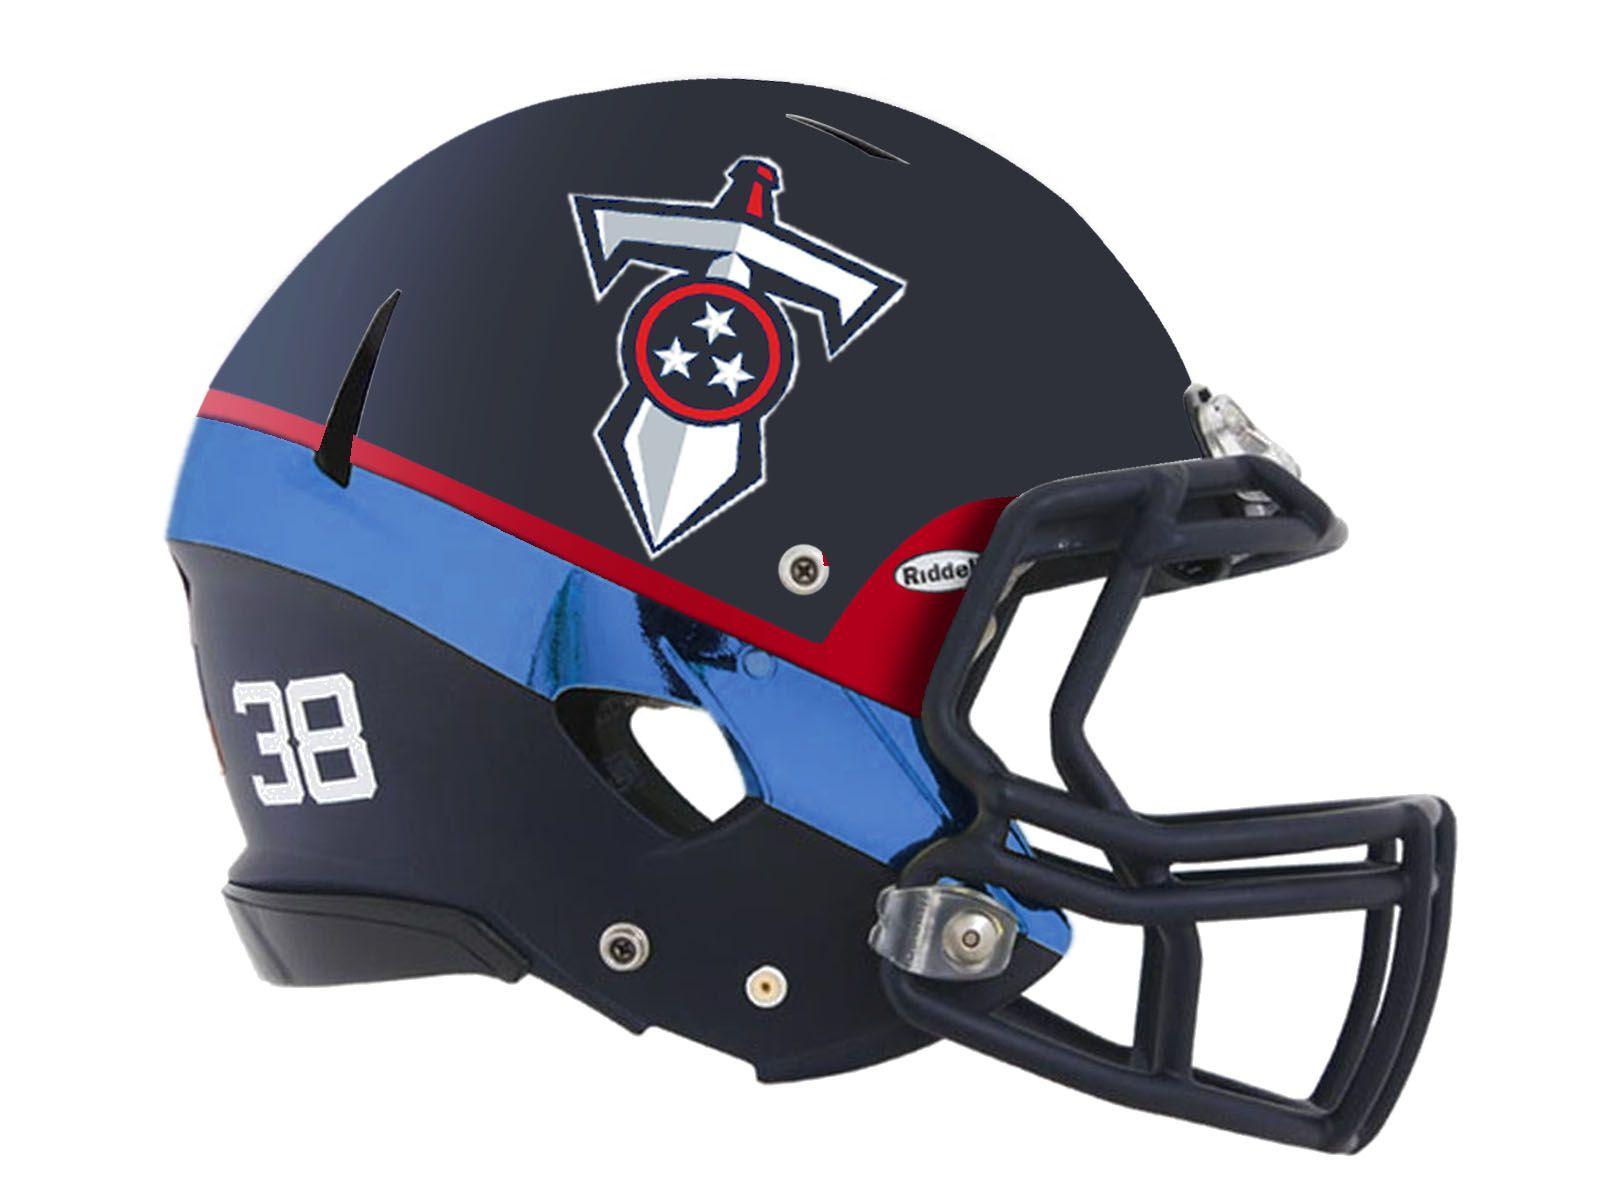 drag to resize. Art style. Helmets, Titans football